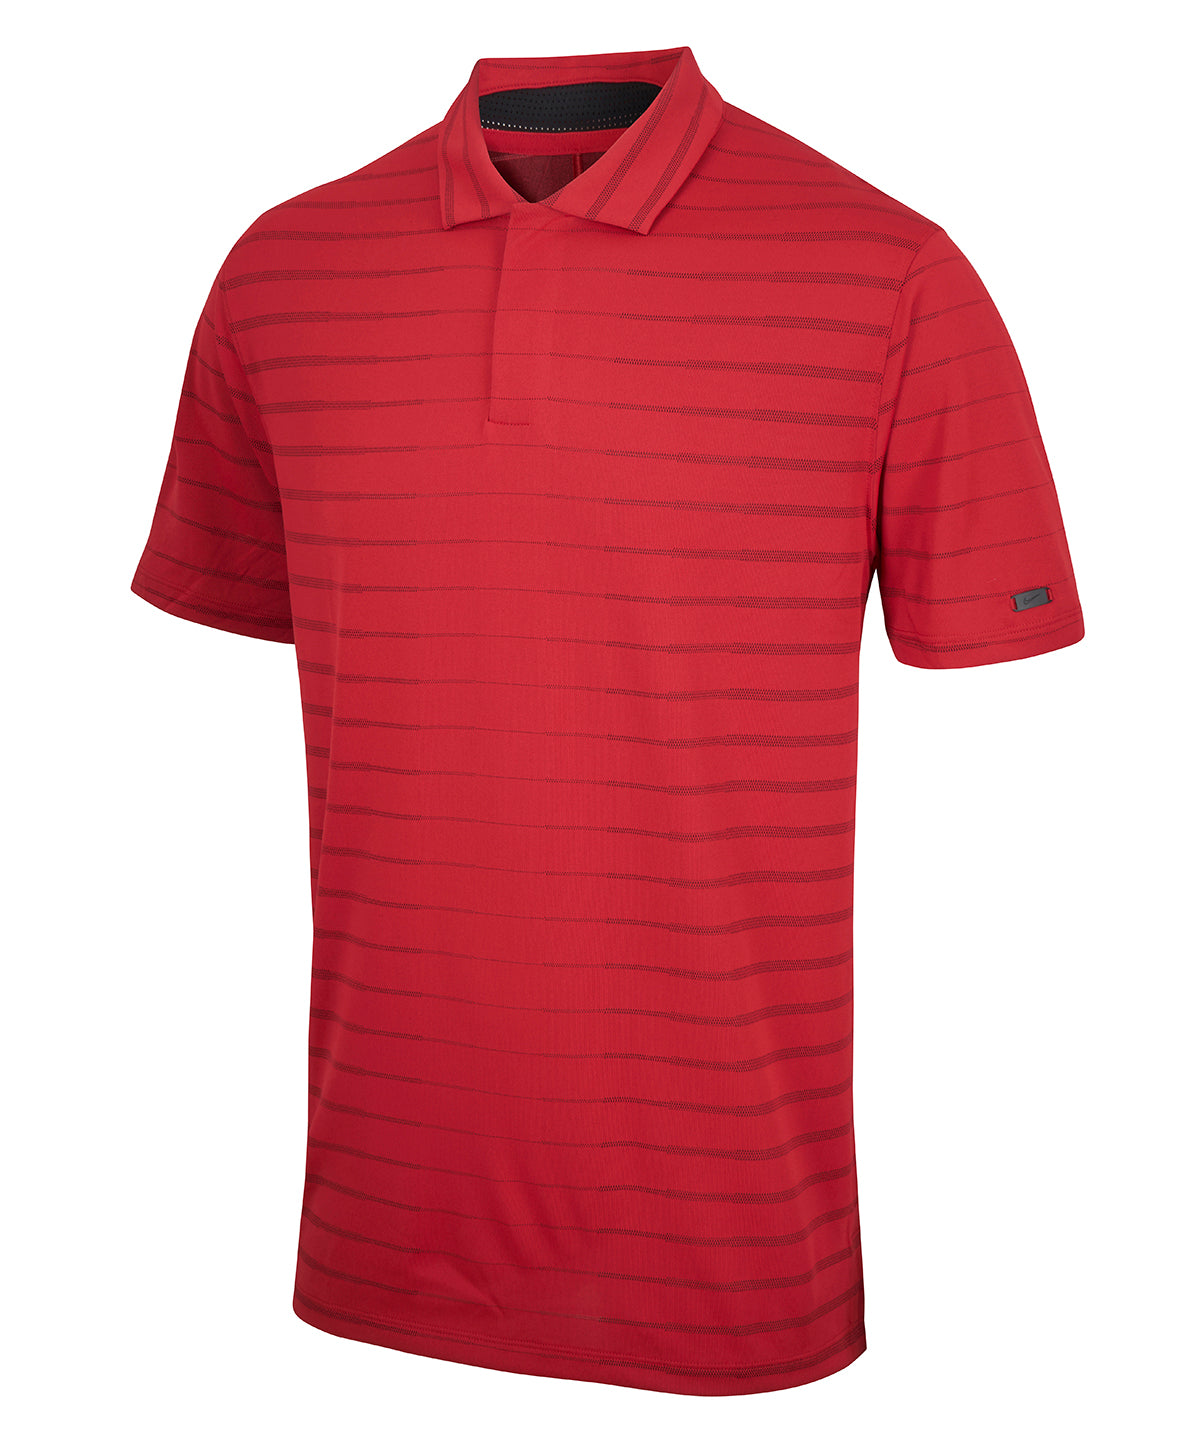 Personalised Polo Shirts - Black Nike Nike dry vapor polo